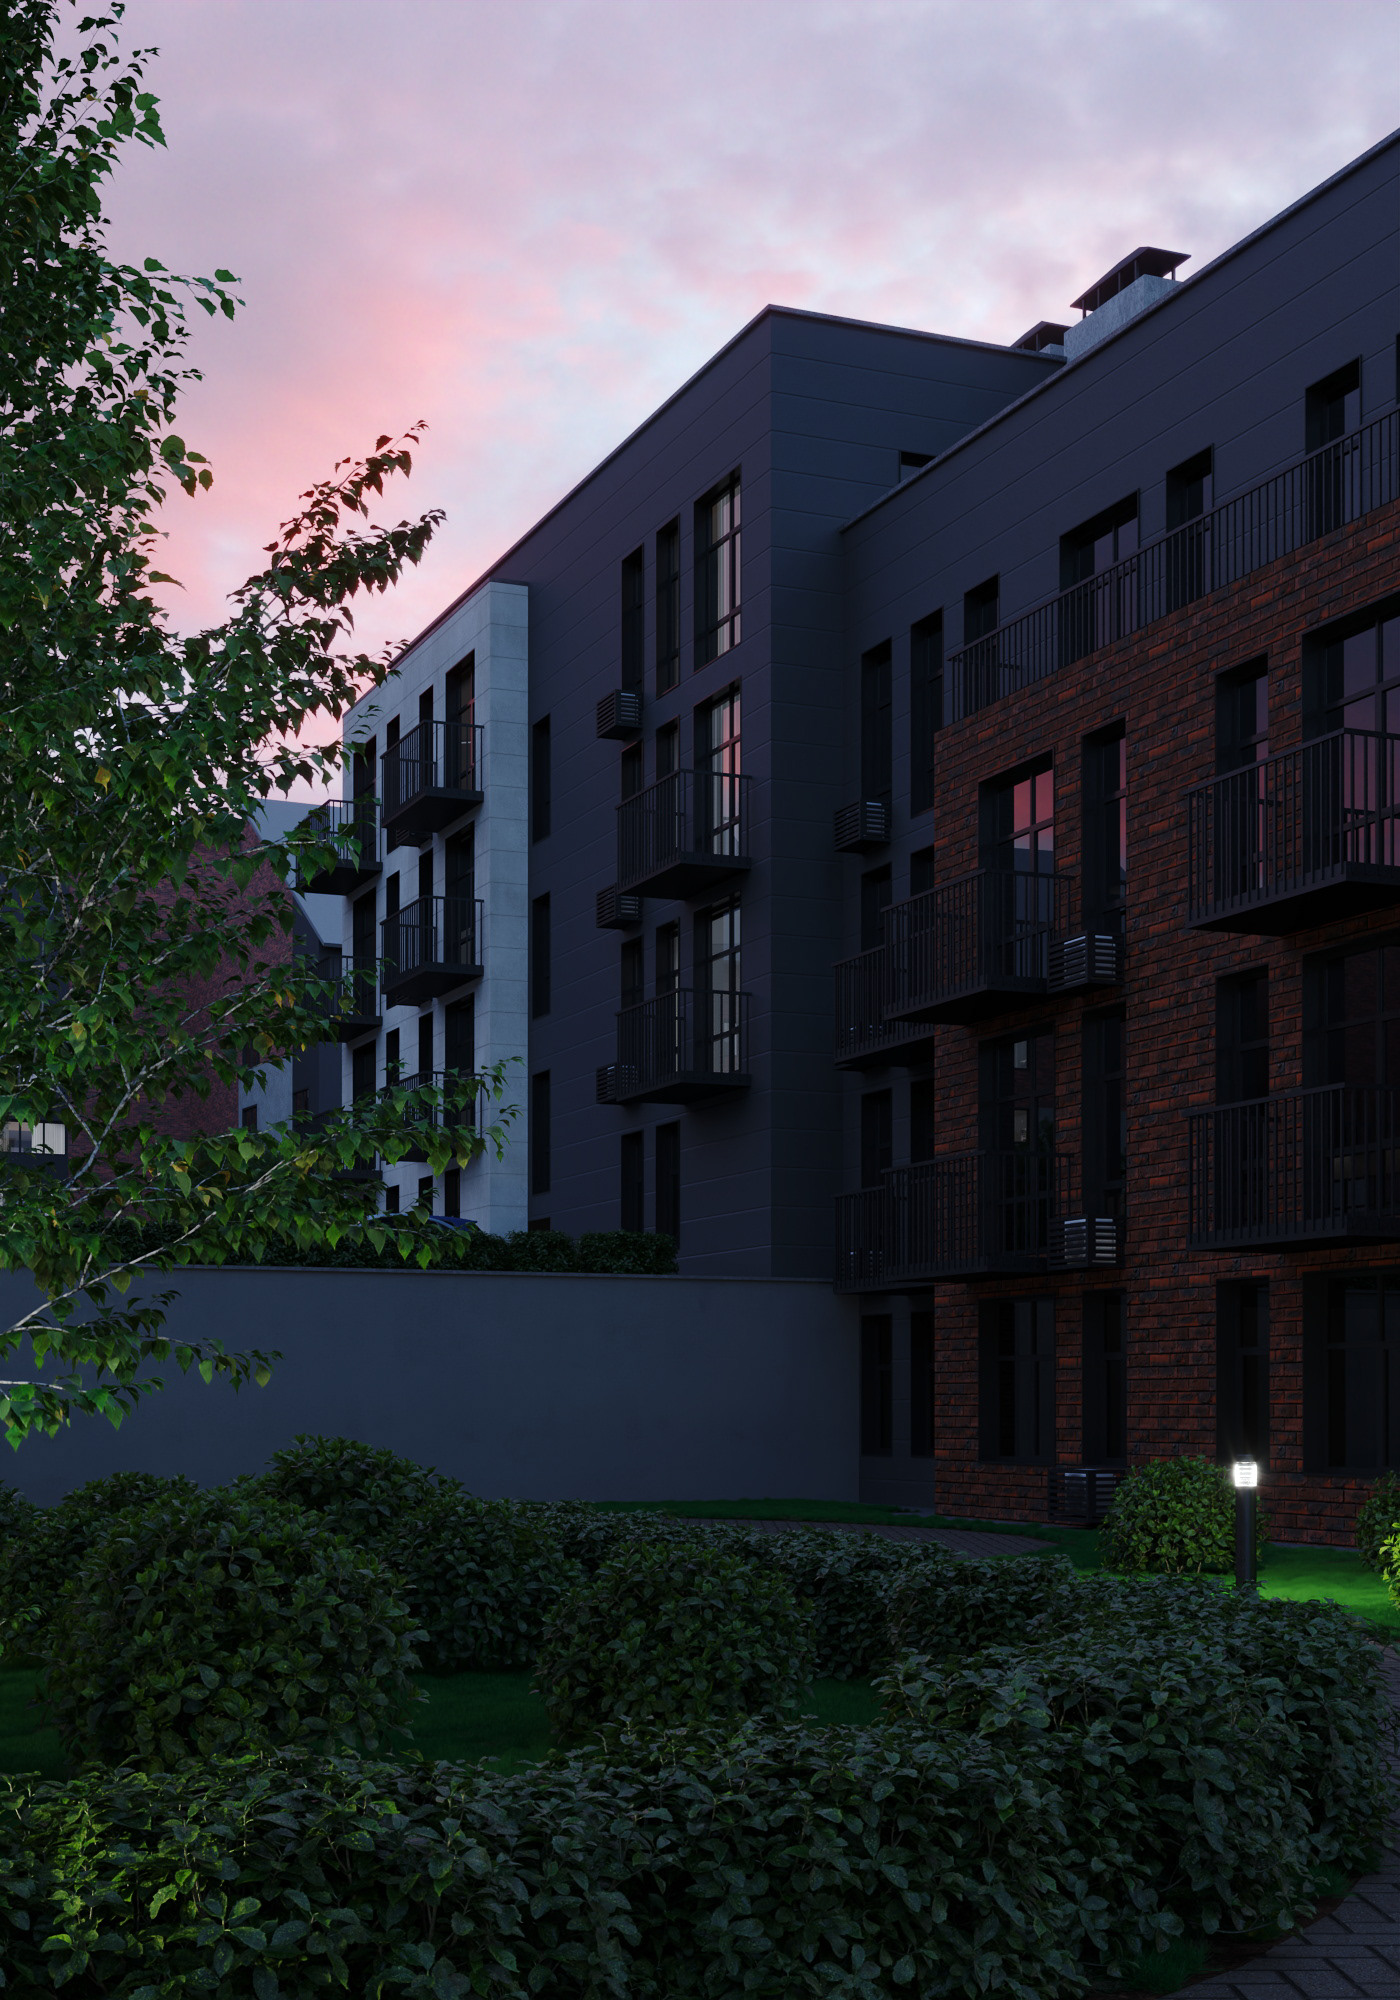 3dmax architecture brick corona render  exterior house interior design  Render visualization vray